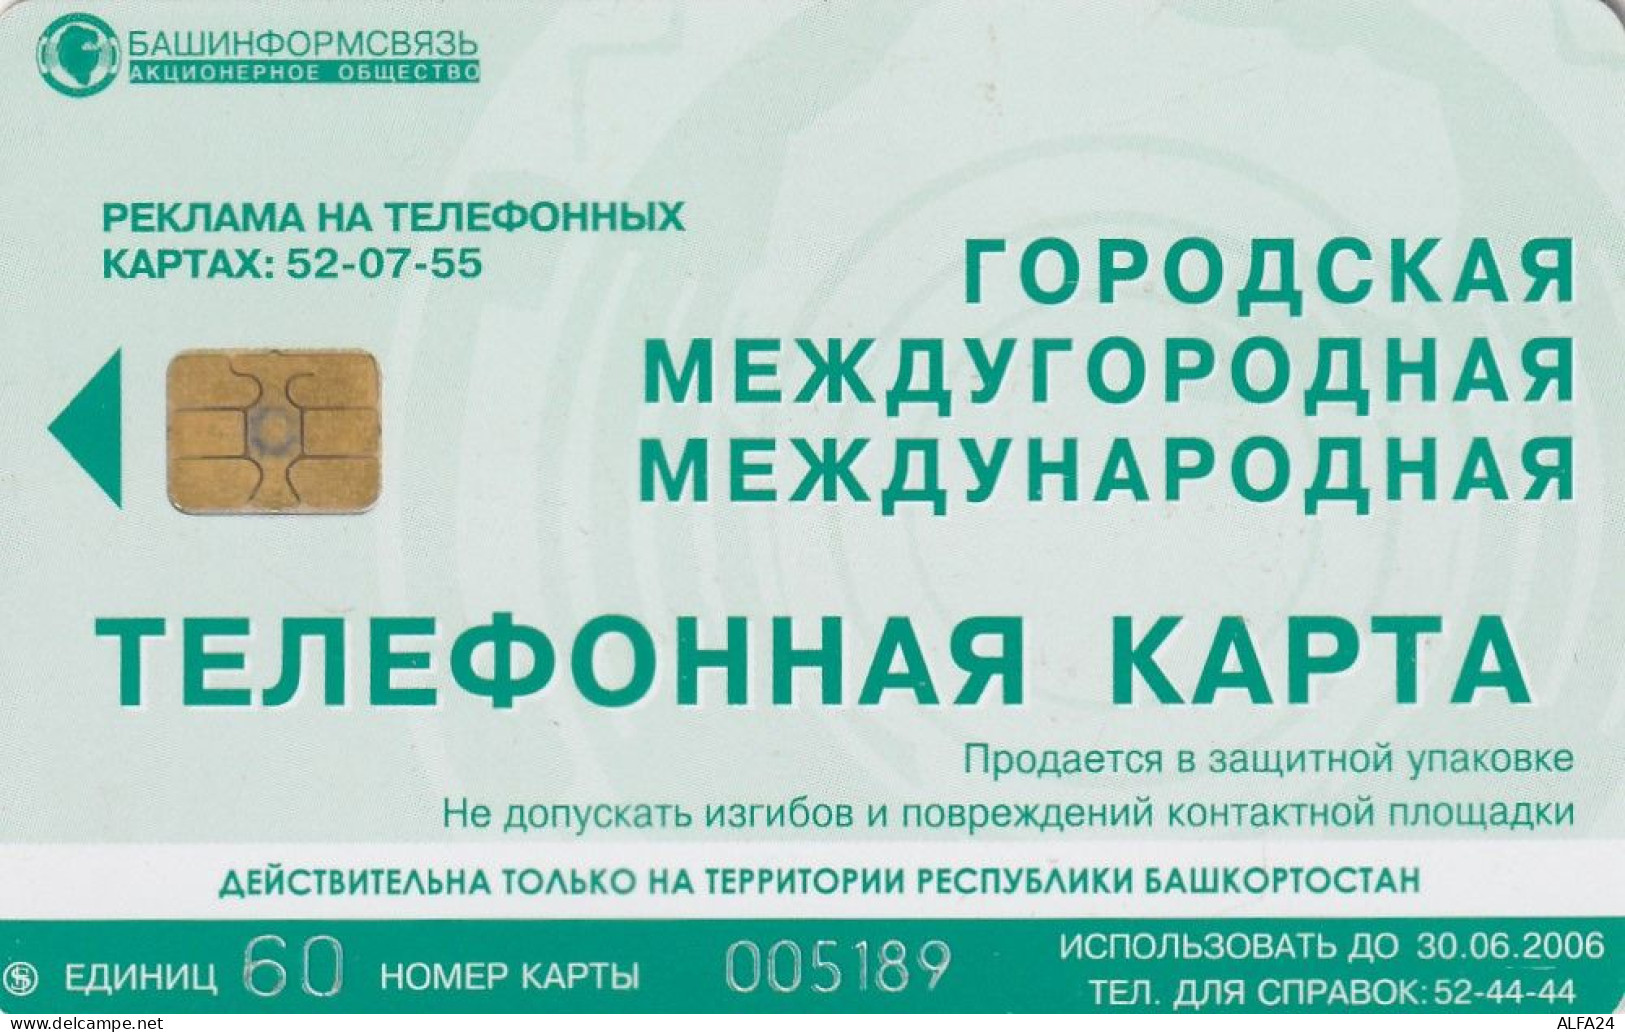 PHONE CARD RUSSIA Bashinformsvyaz - Ufa (E10.4.4 - Russia